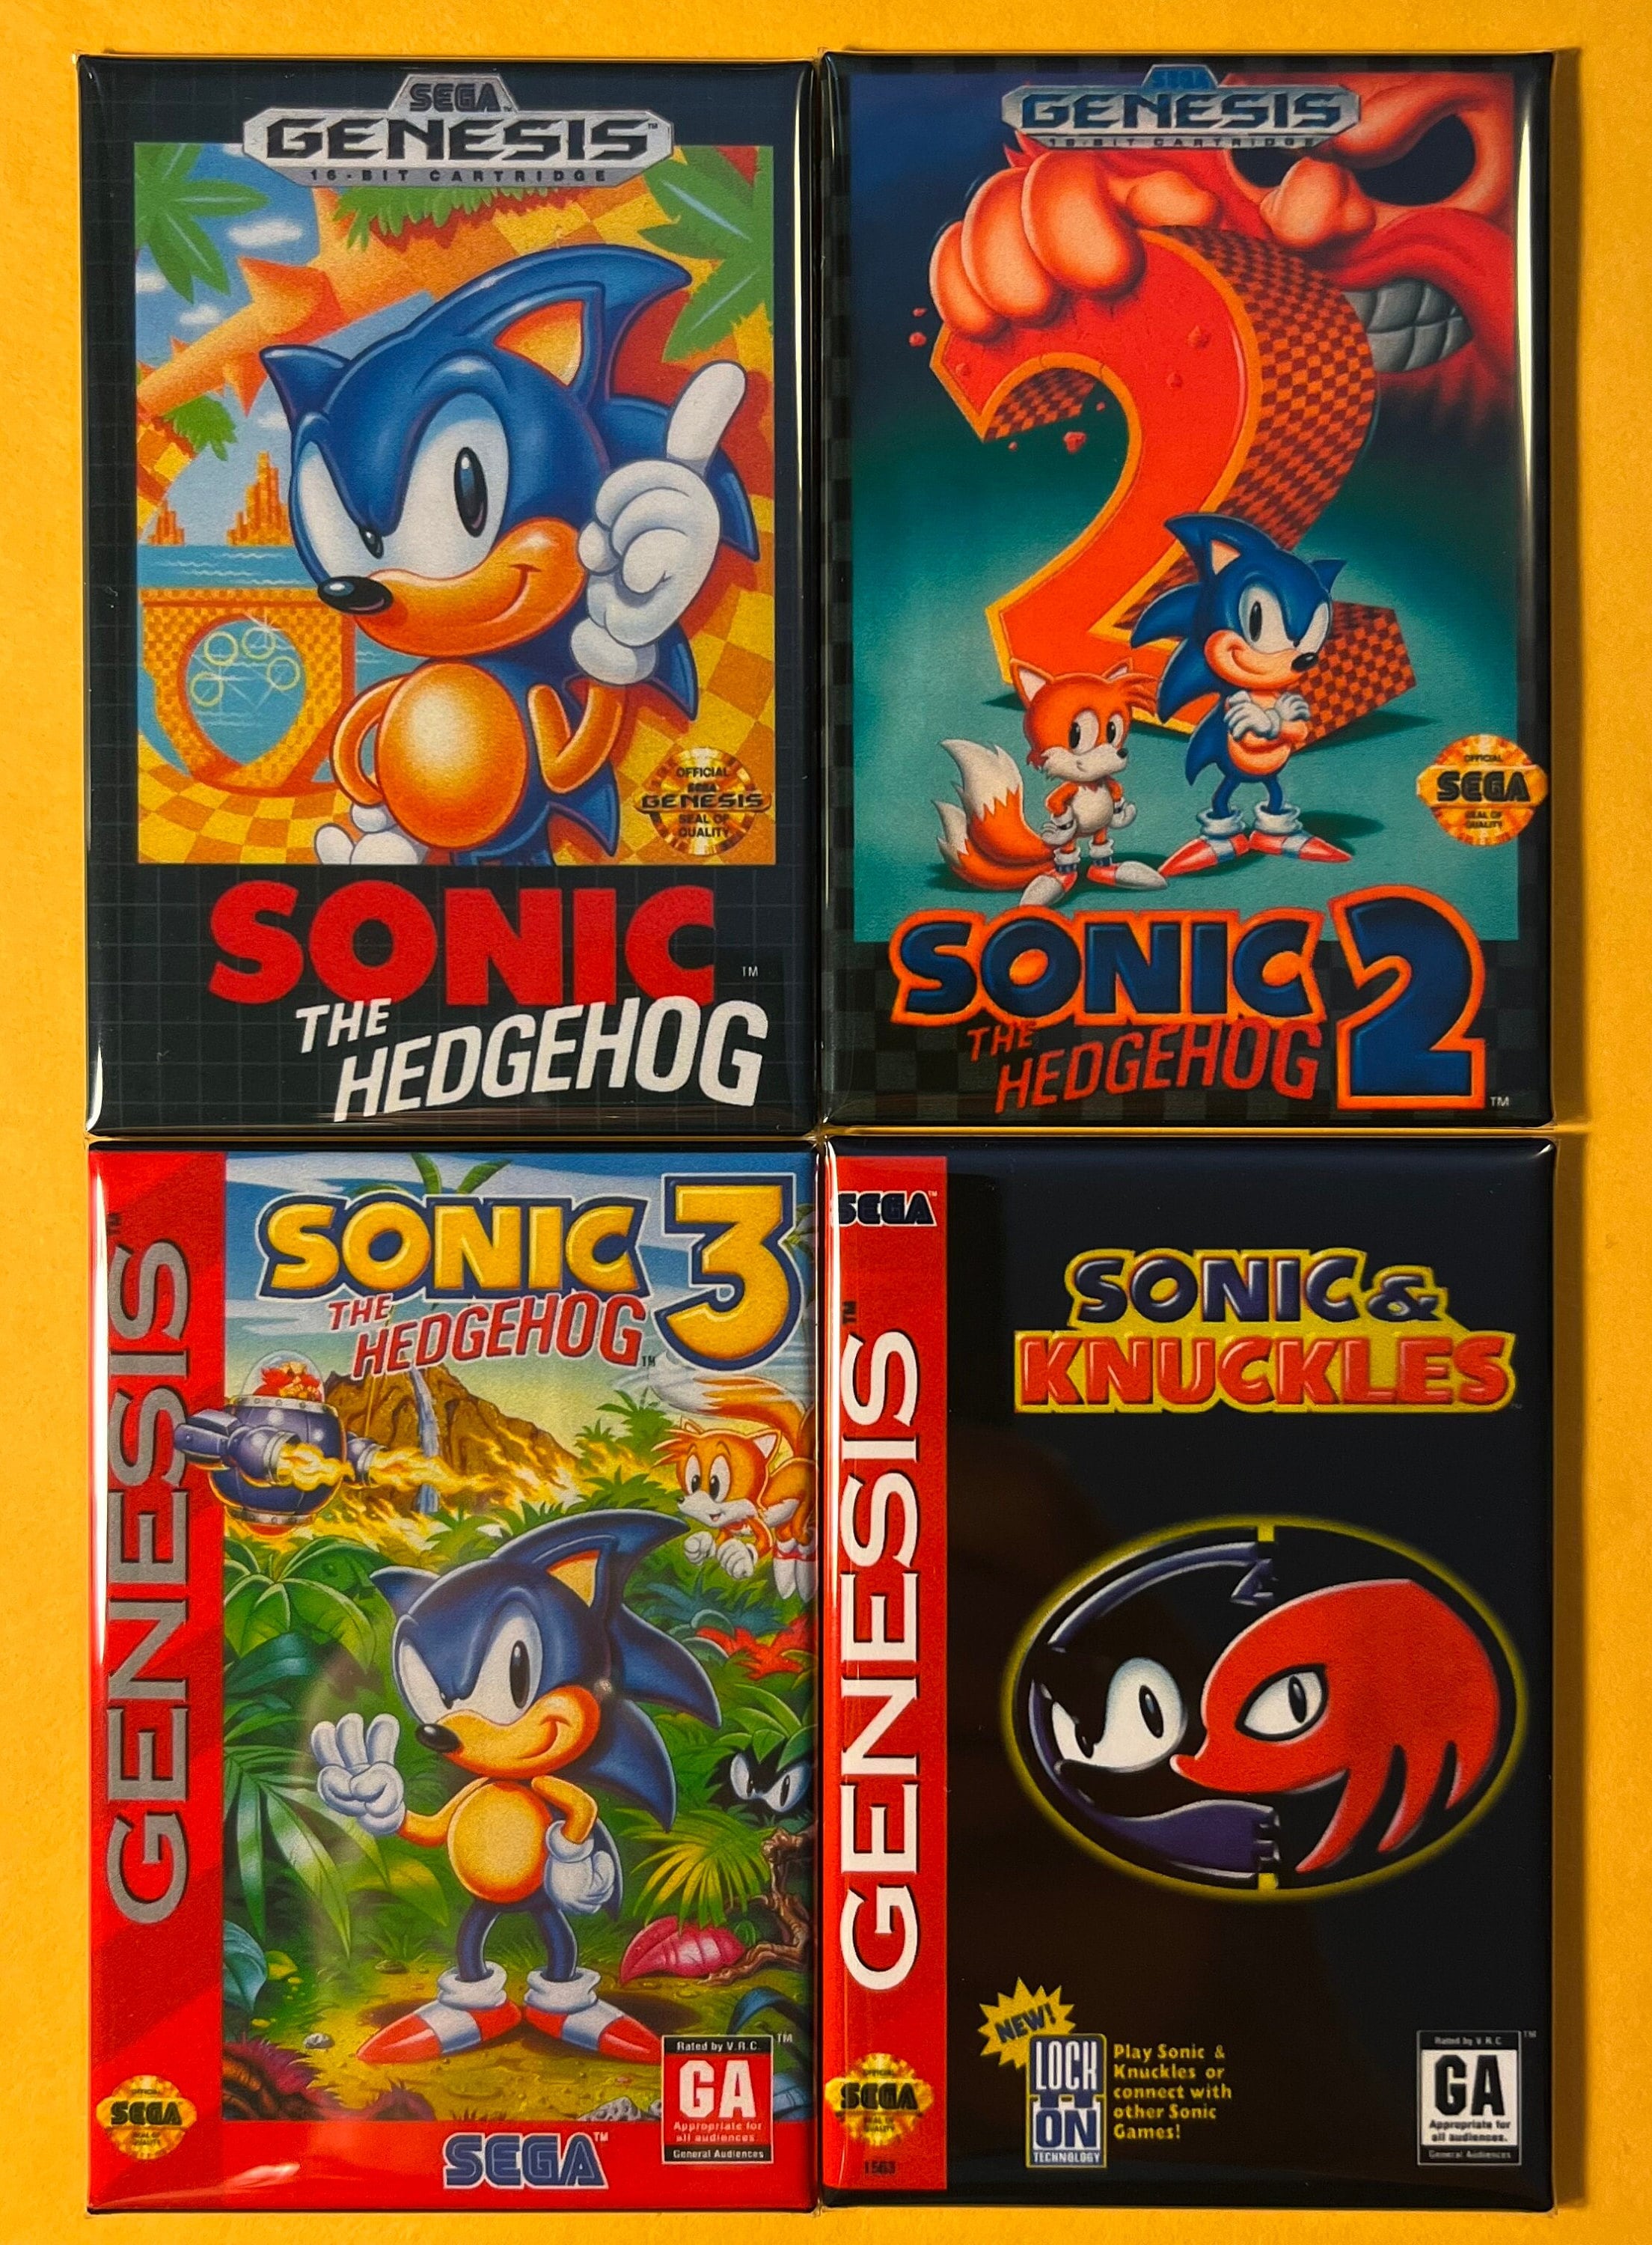 Sonic the Hedgehog 2 (2022) Fridge Magnet #1196799 Online